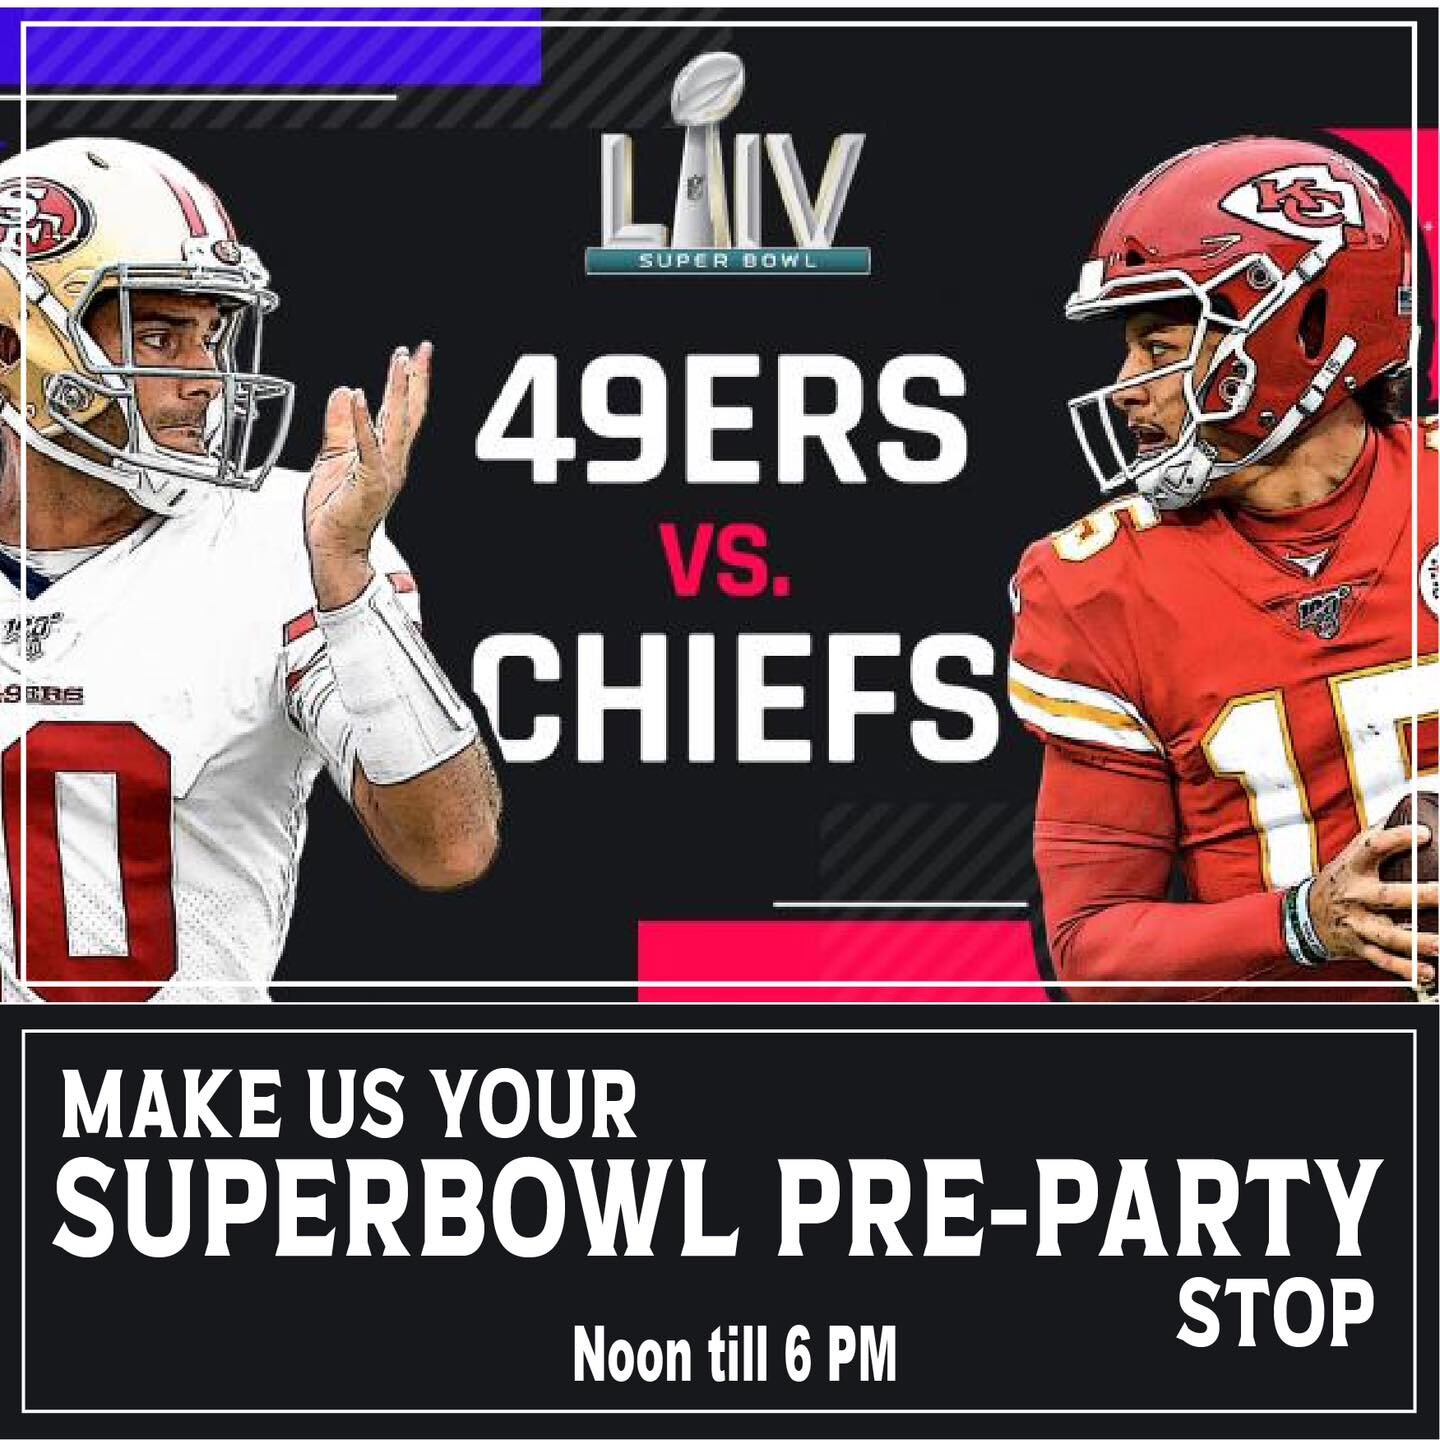 It&rsquo;s Super Bowl Sunday!  Make us your Super Bowl Pre-Party stop.